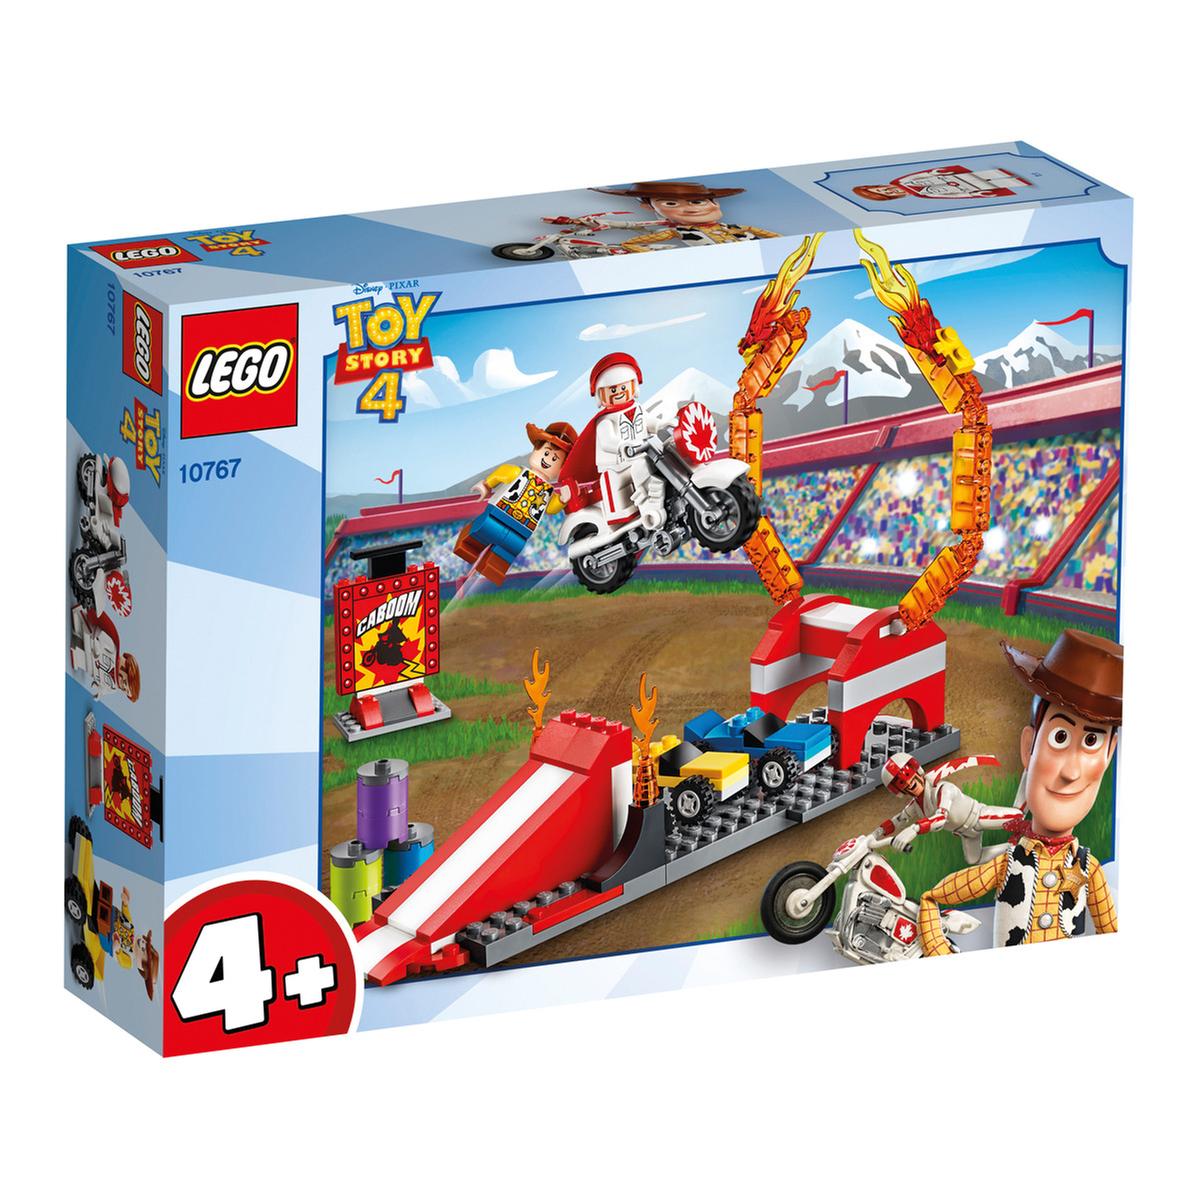 LEGO Toy Story - Espectáculo Acrobático de Duke Caboom - 10767 | Toy Story  | Toys"R"Us España